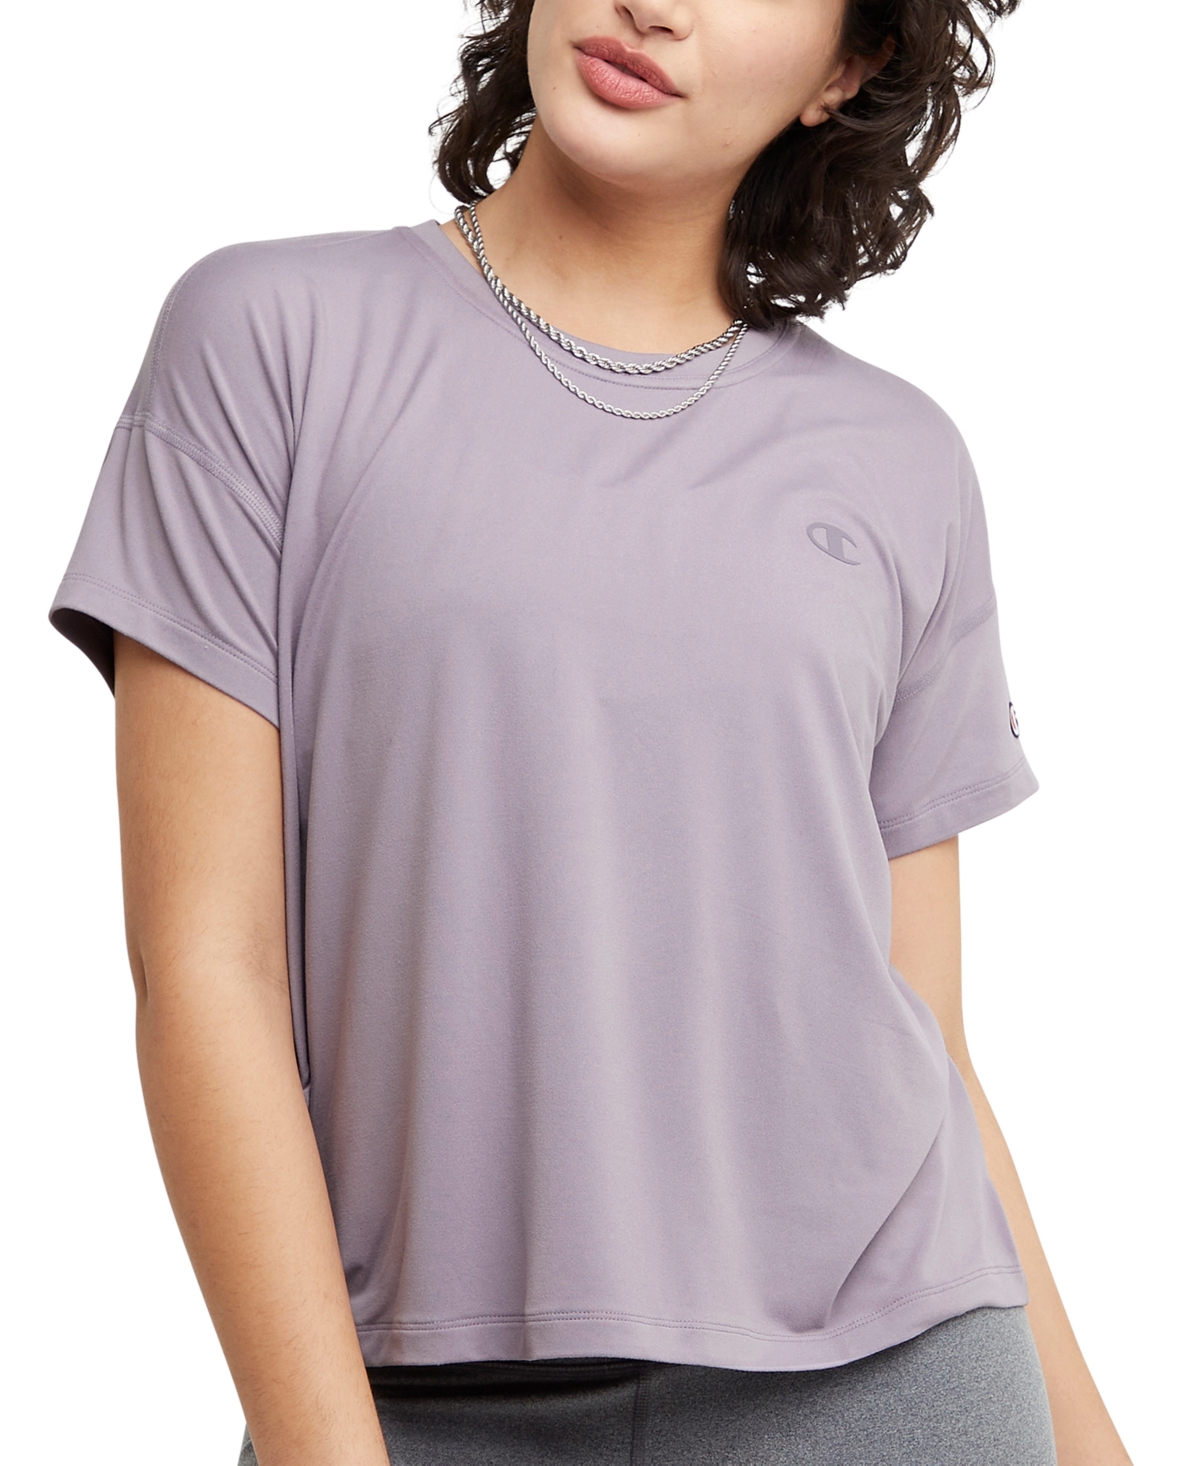 Champion Women's Soft Touch Essential T-Shirt